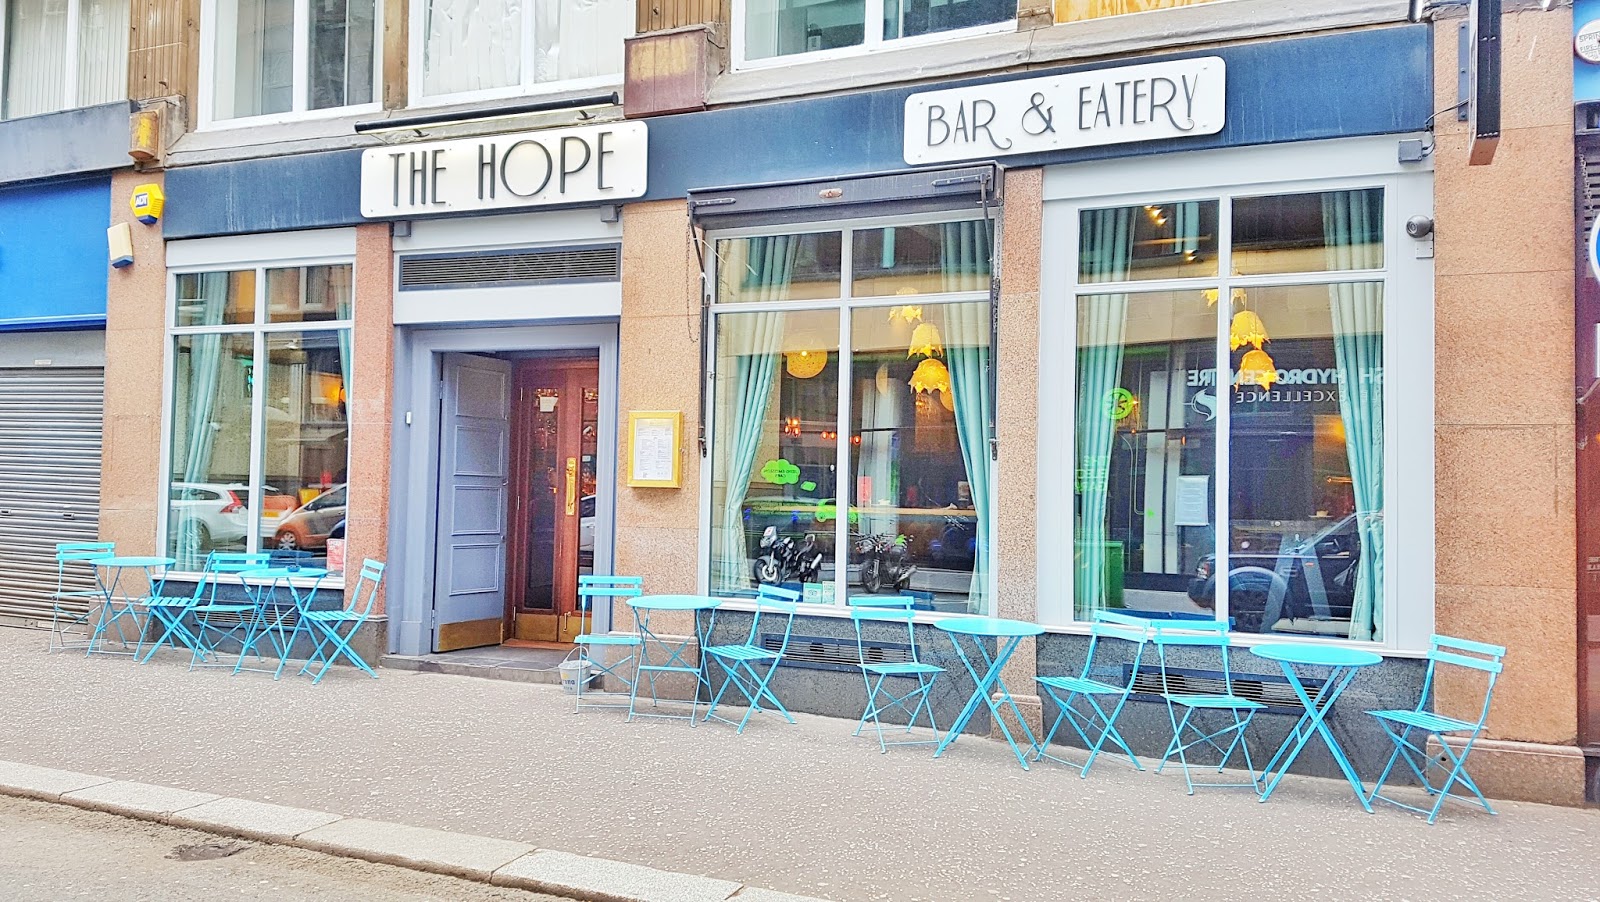 The Hope Bar & Eatery - The Life Of A Glasgow Girl